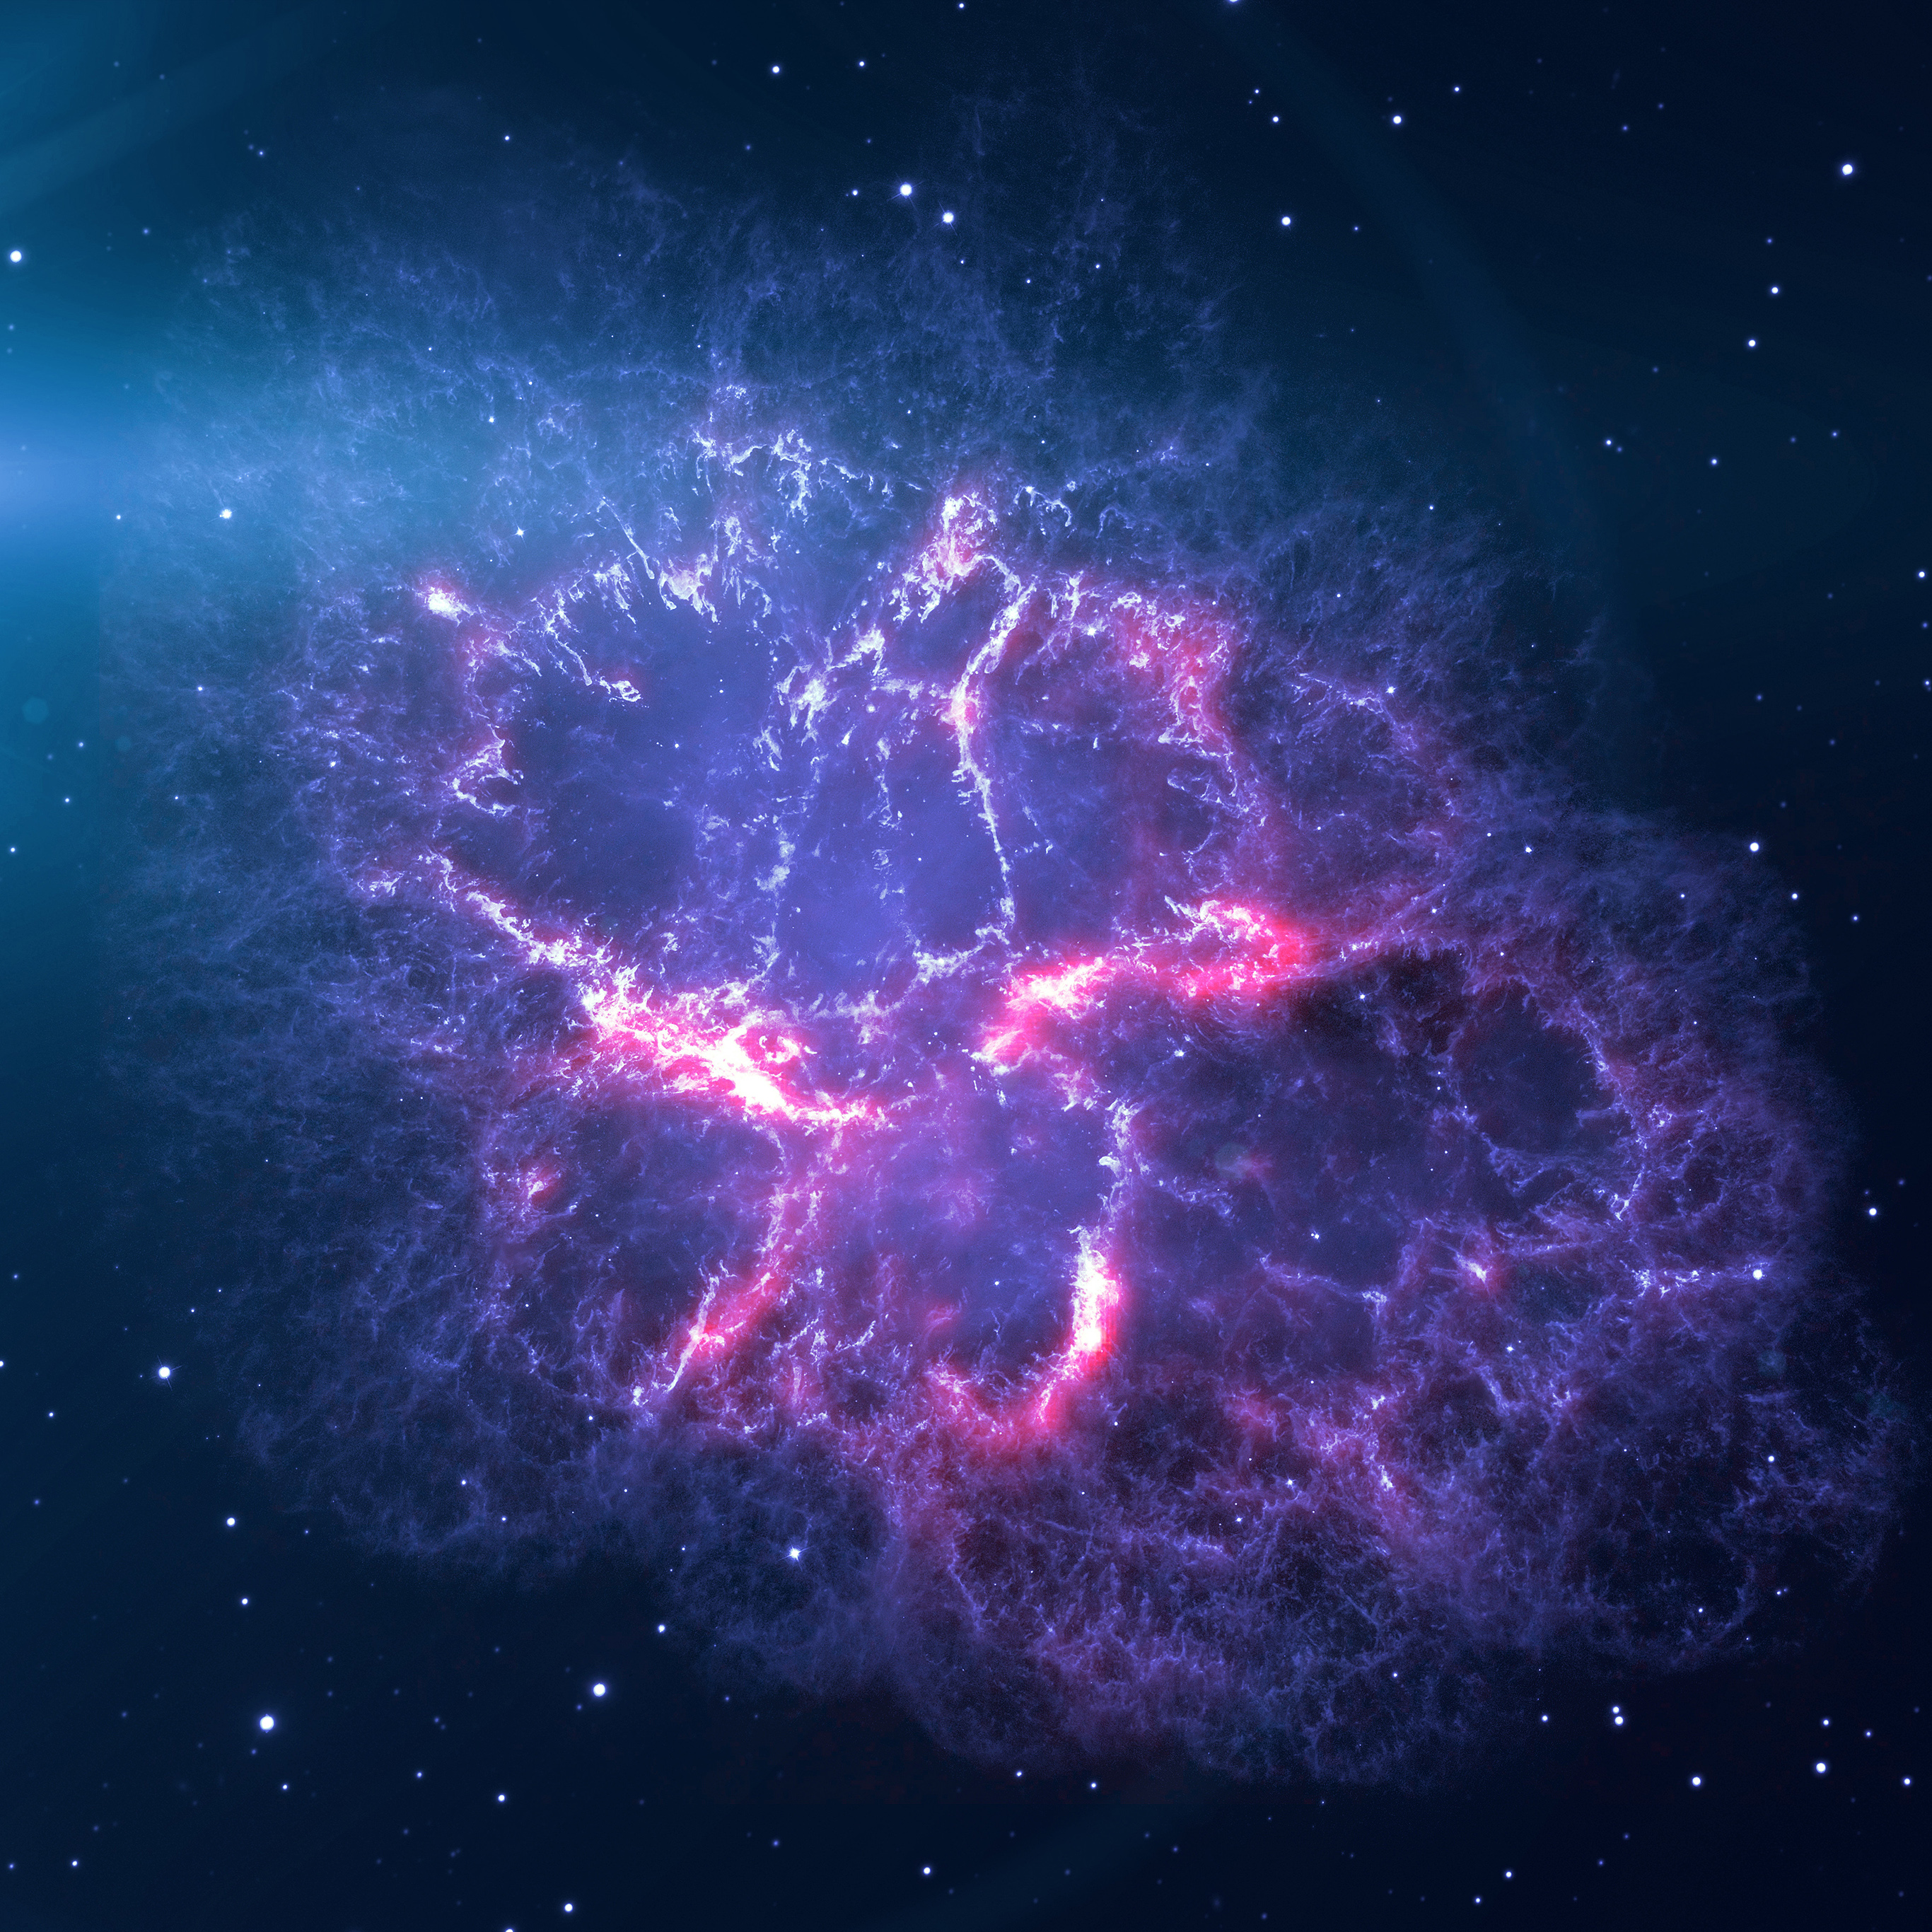 space-astronomy-galaxy-dark-purple-star-flare-ipad-pro